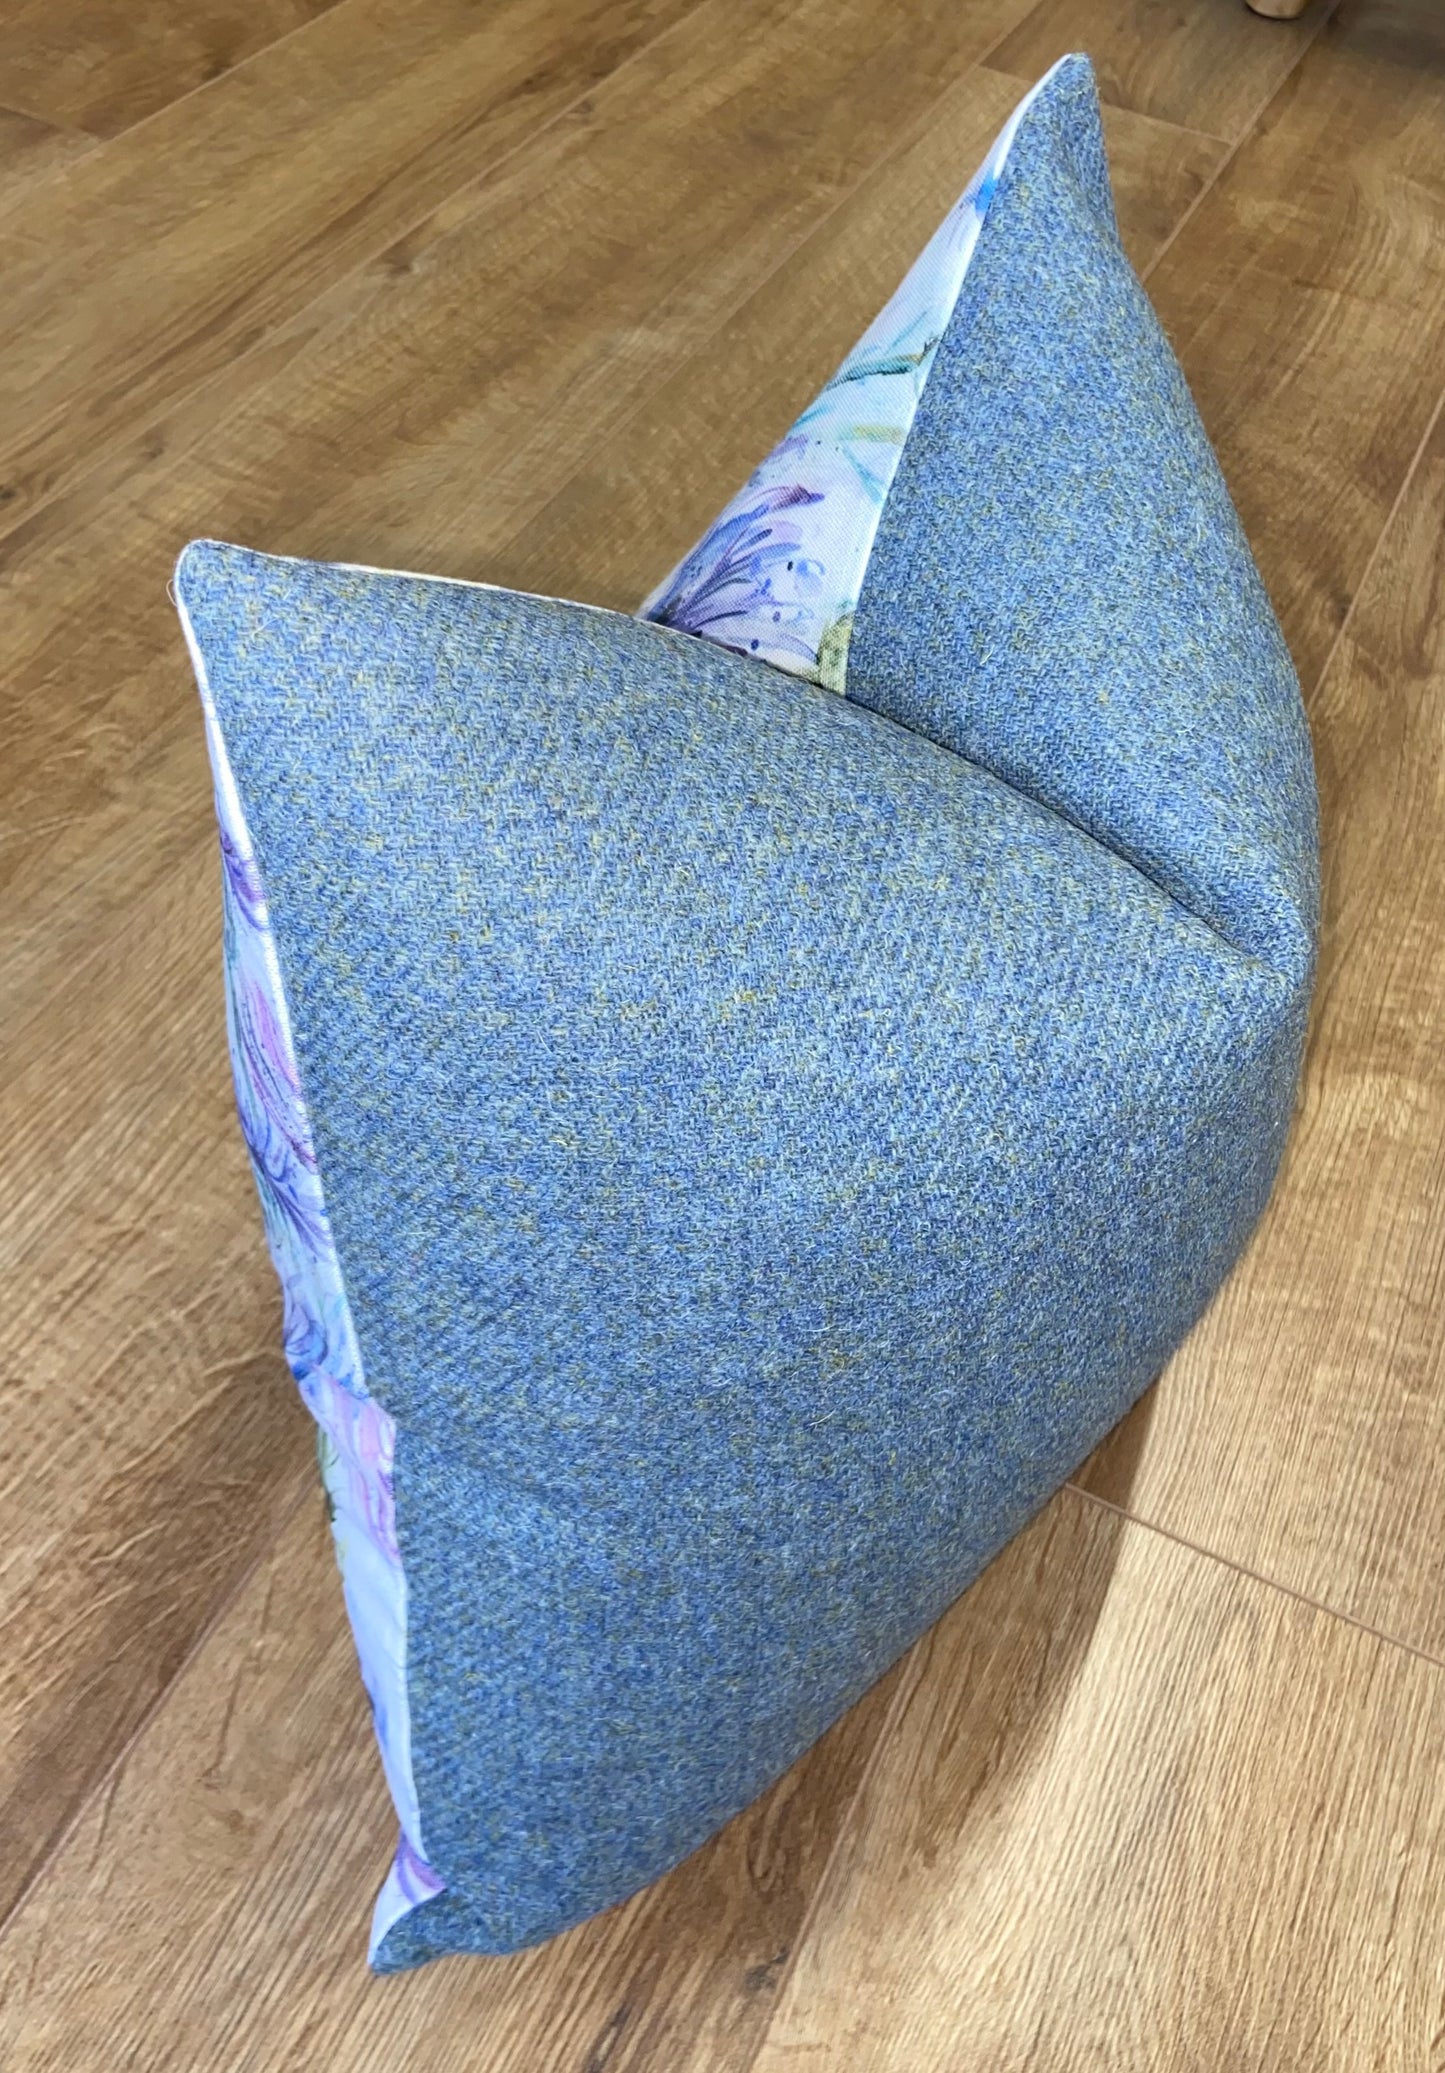 Watercolour Thistle and Blue Harris Tweed Cushion, Handmade, 18”